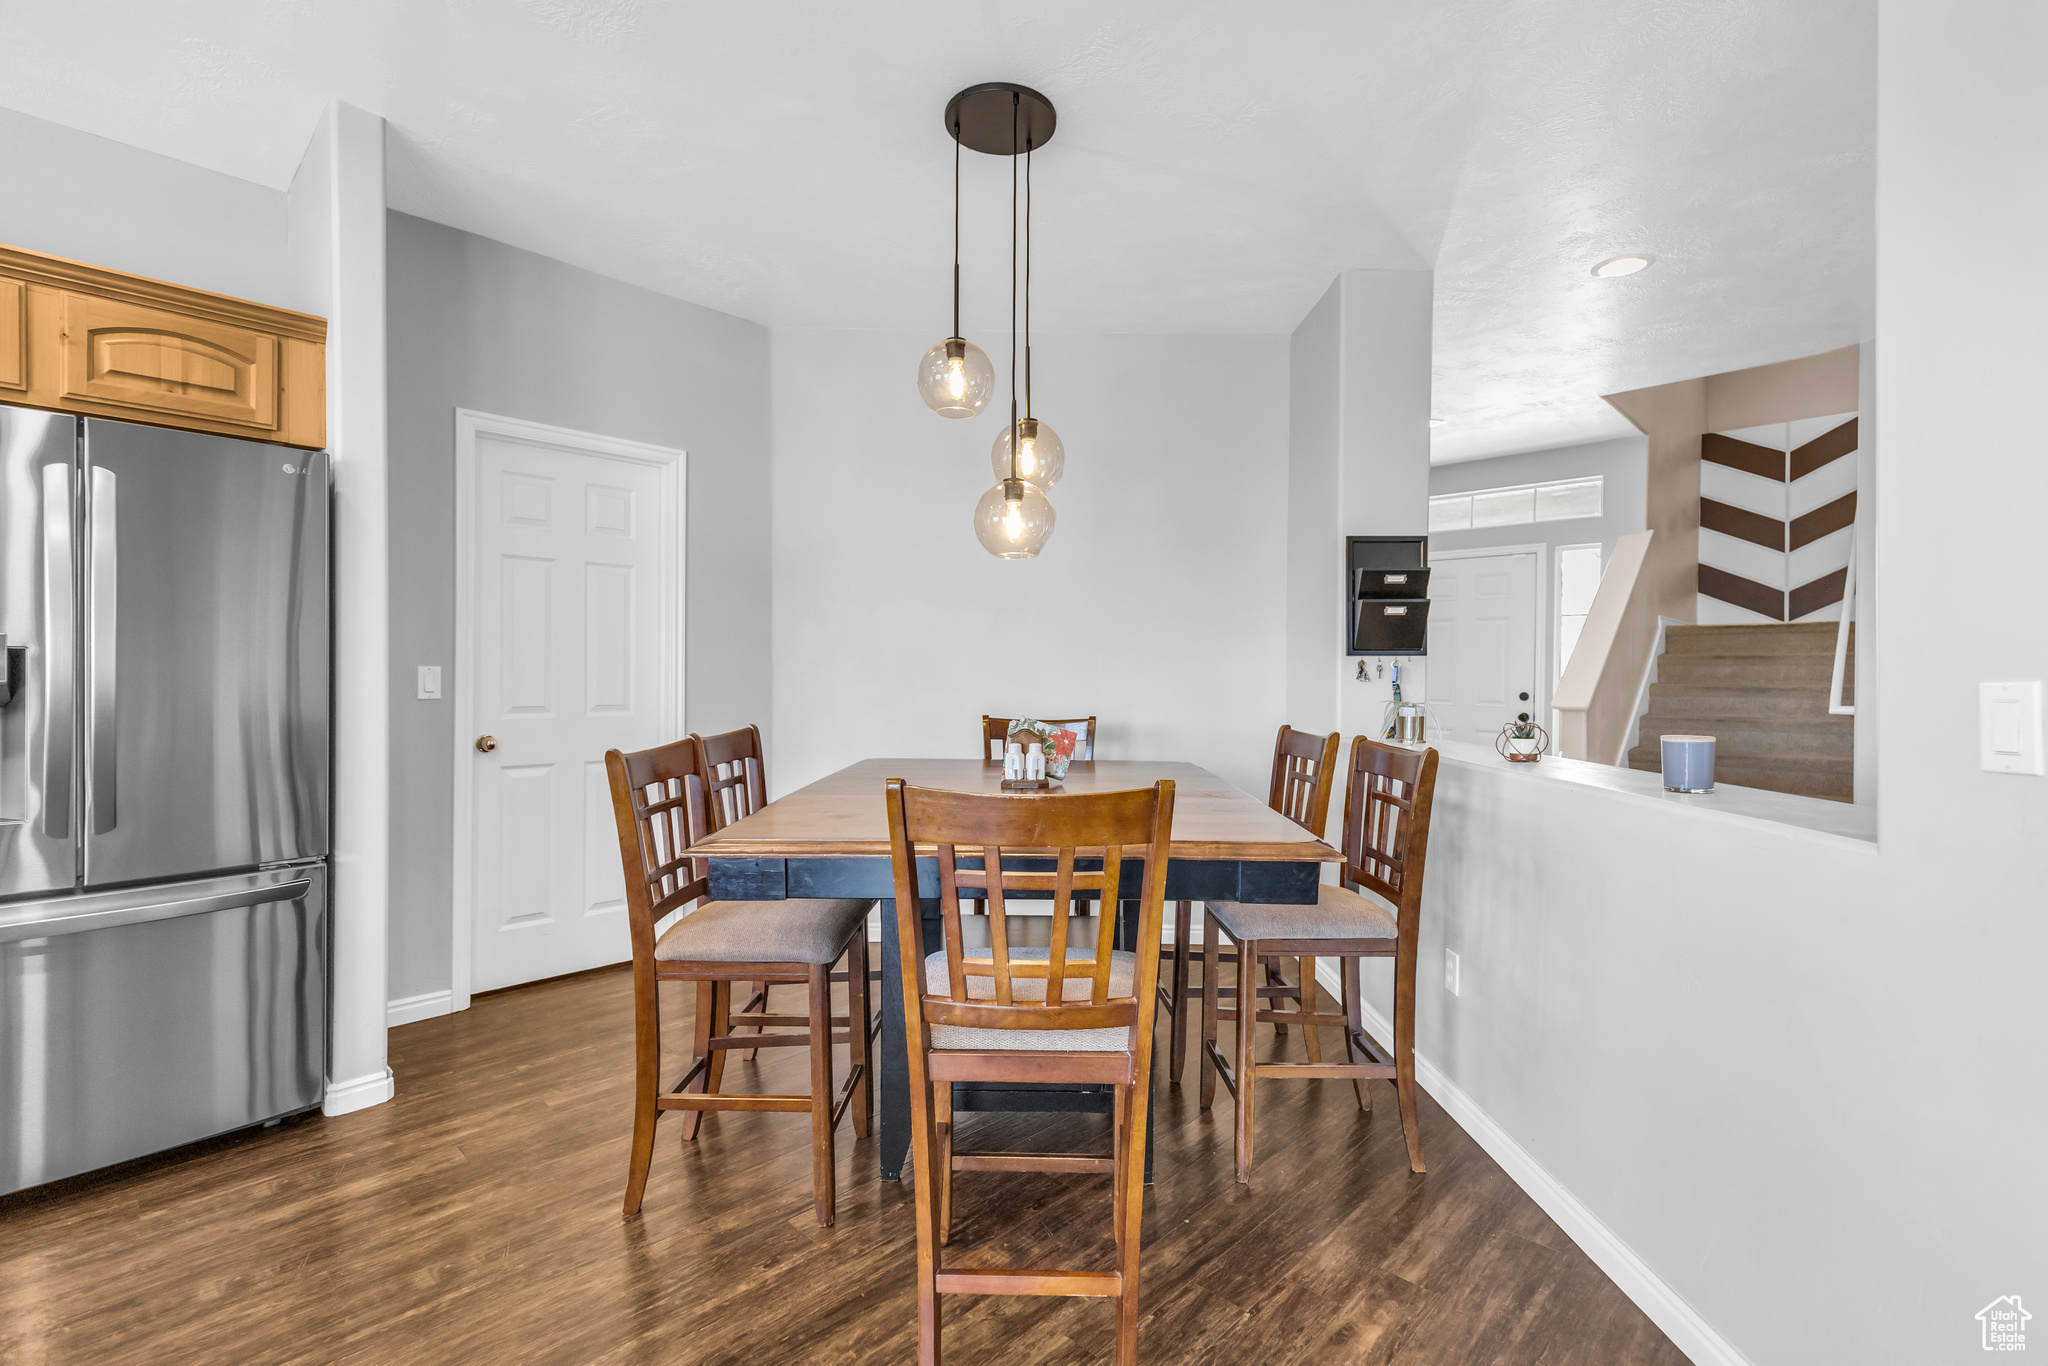 Dining space featuring dark wood-type flooring